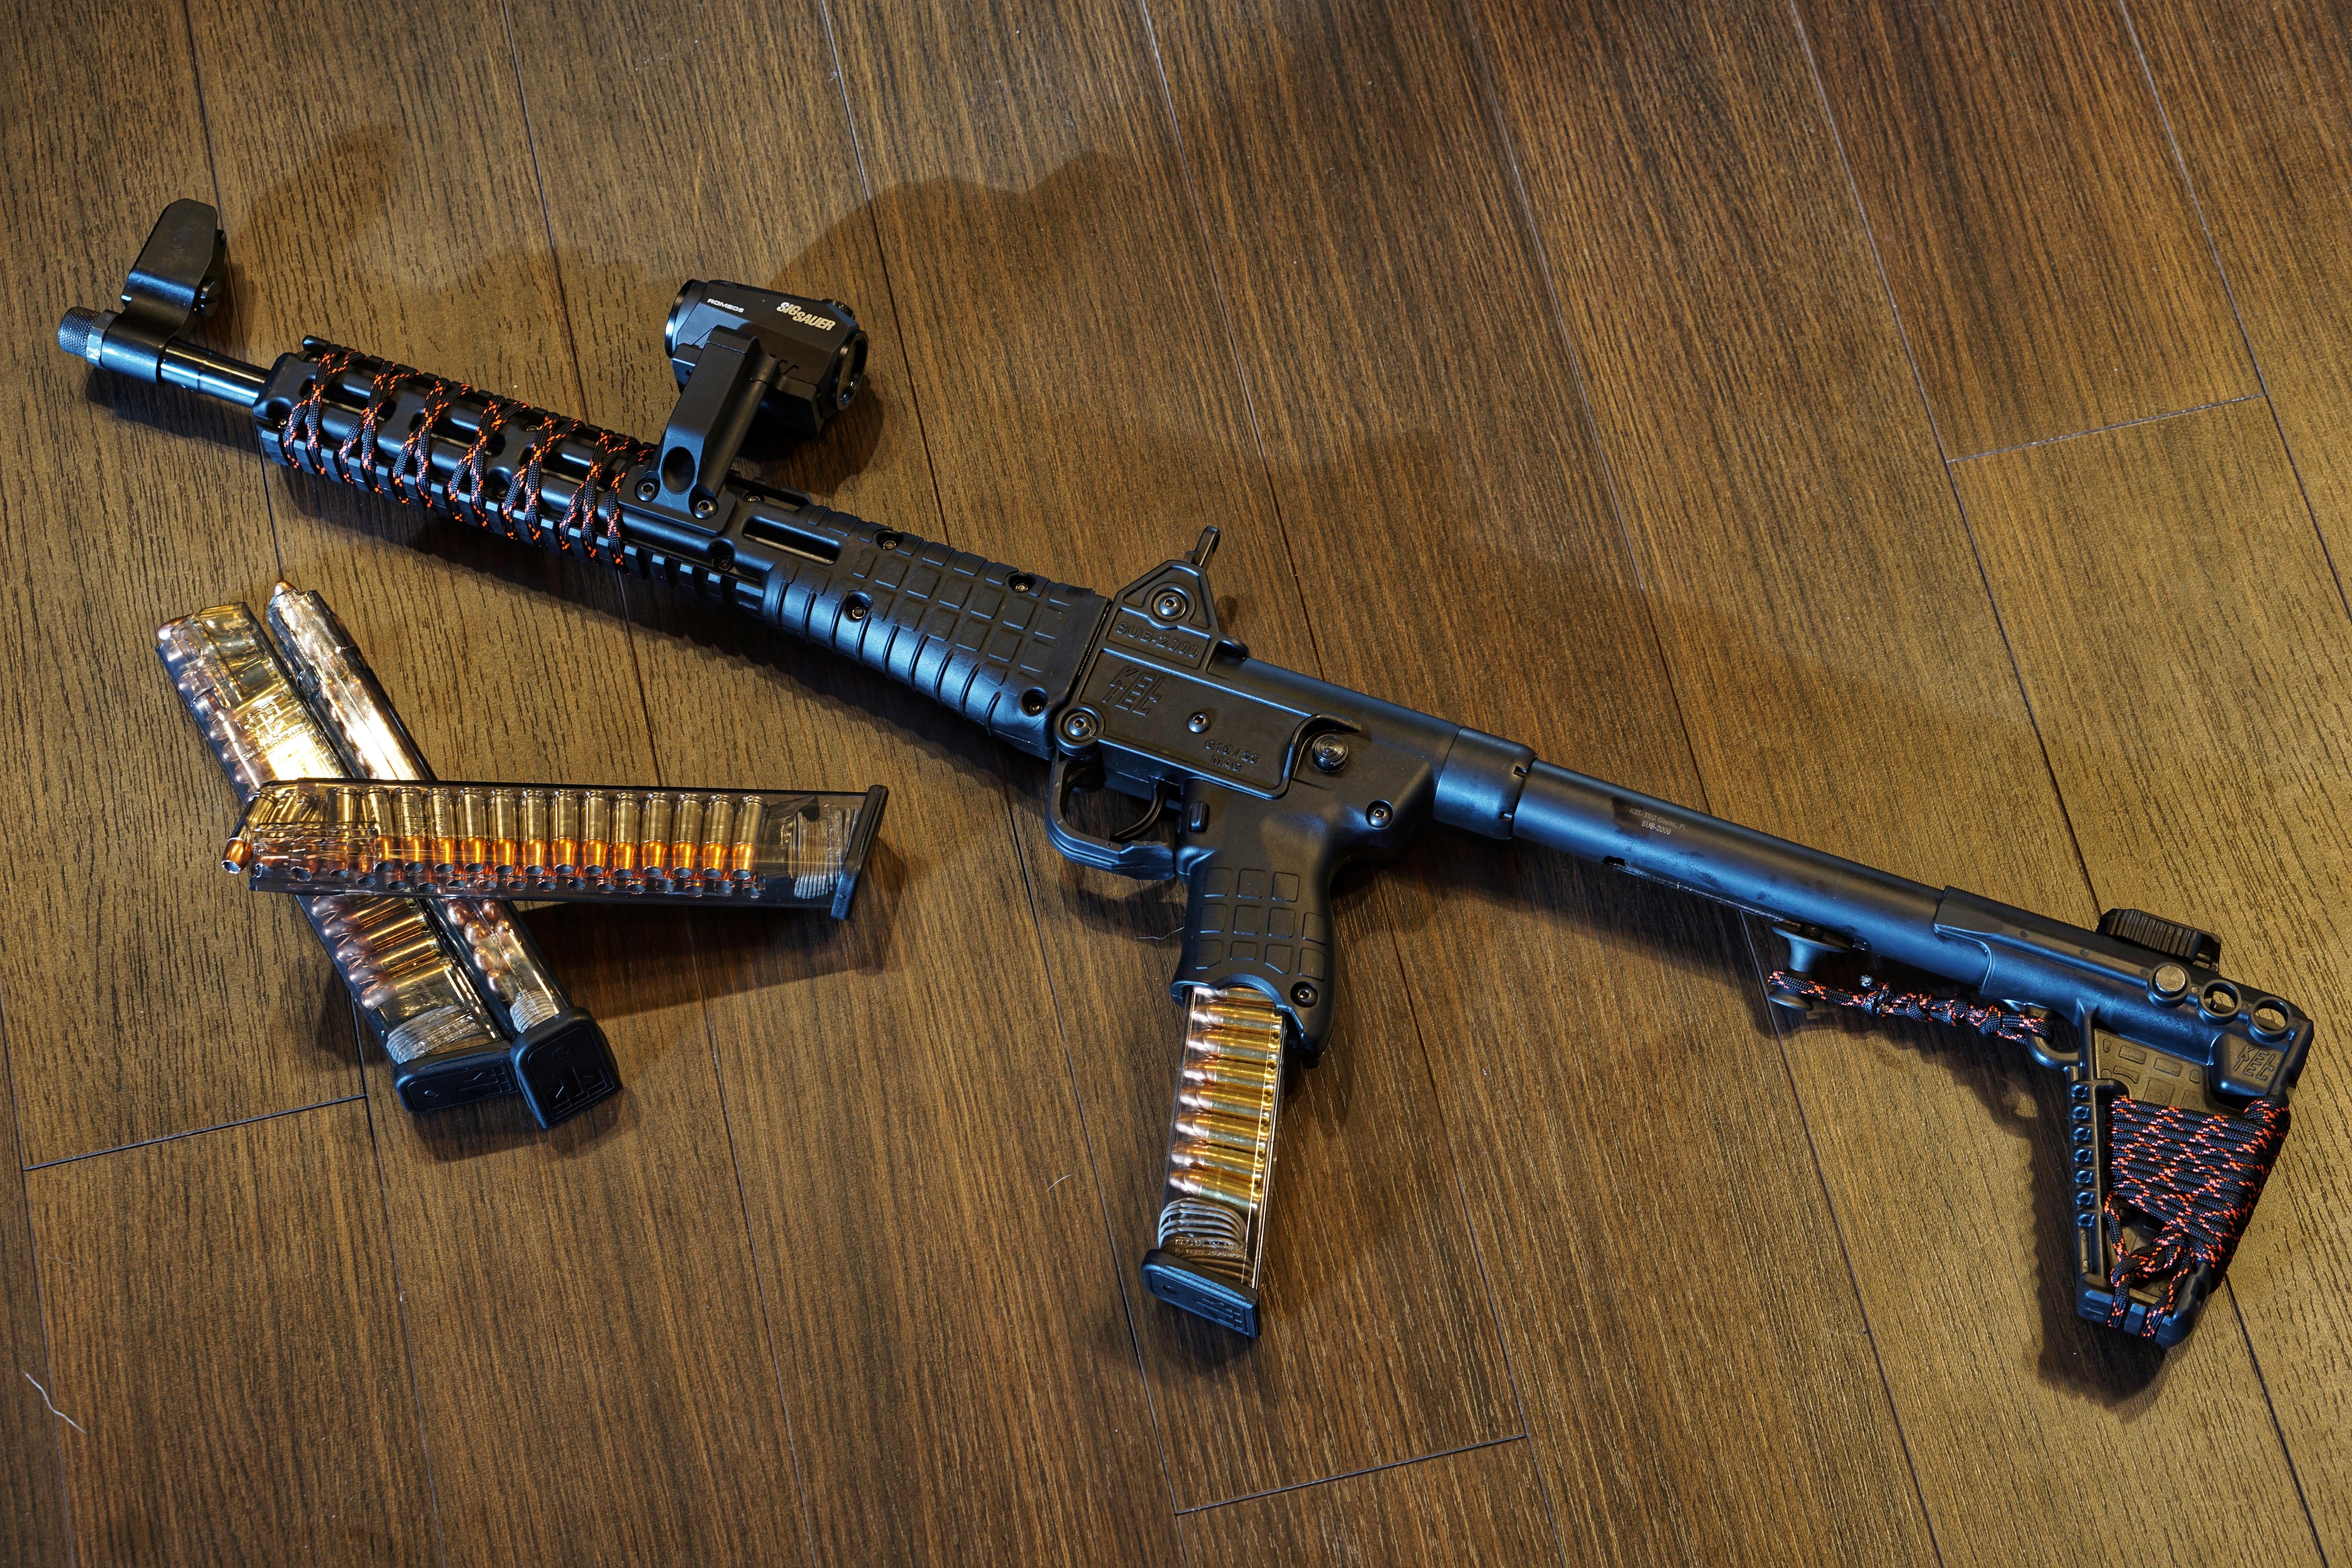 Kel-Tec’s Sub 2000 'Folding Gun': Just How Good Is It? | The National